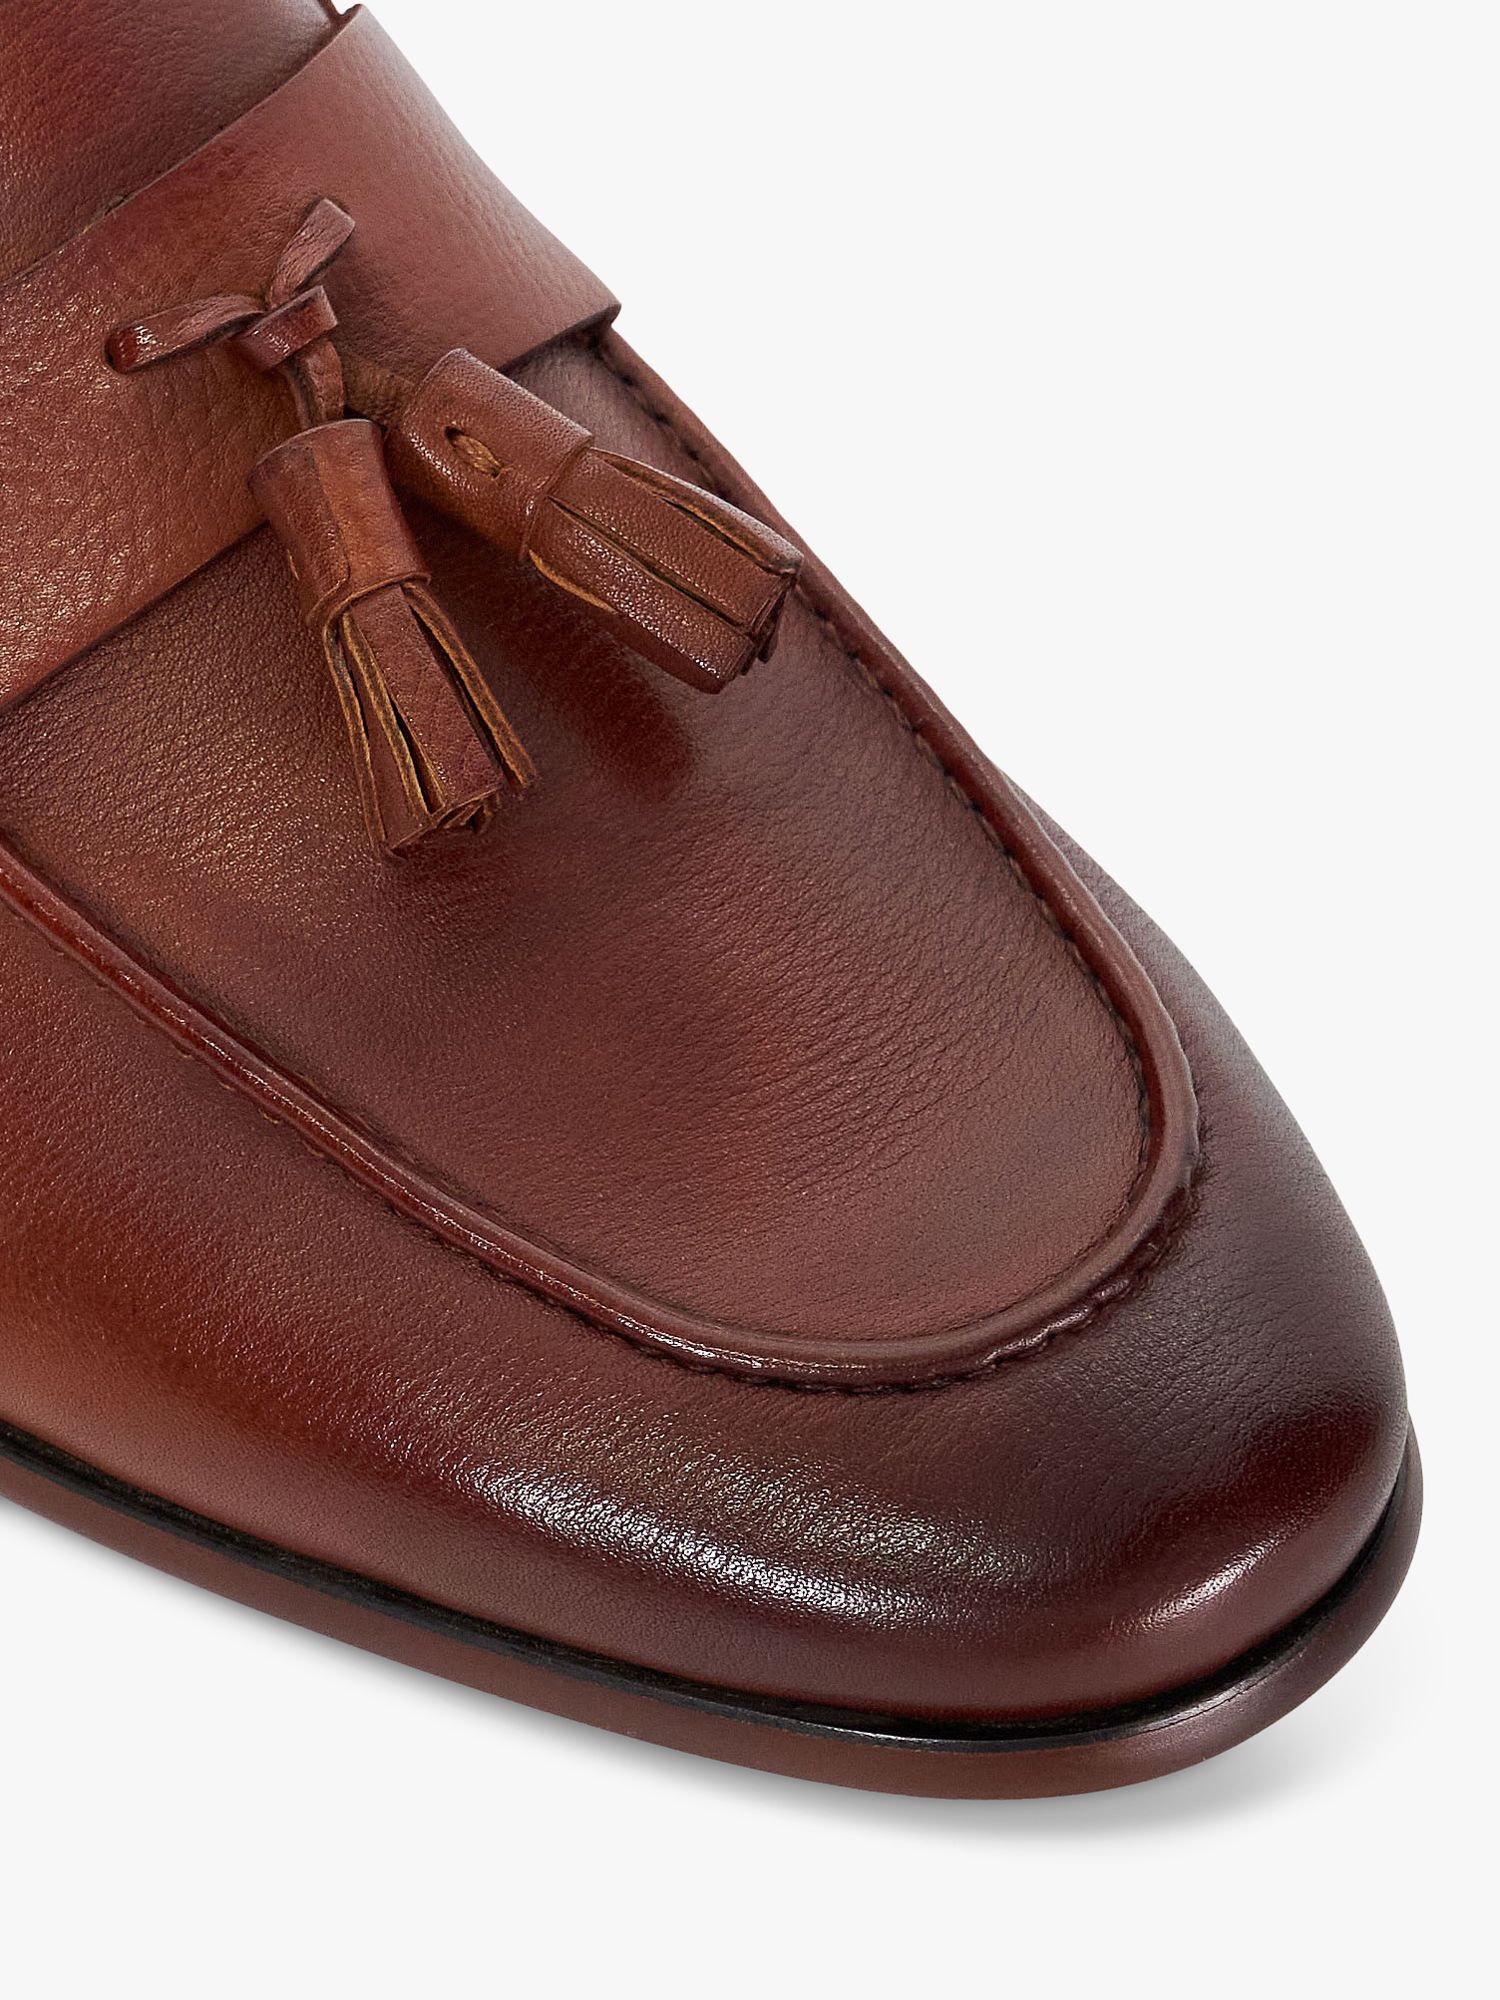 Buy Dune Supremium Tassel Leather Loafers, Tan Online at johnlewis.com